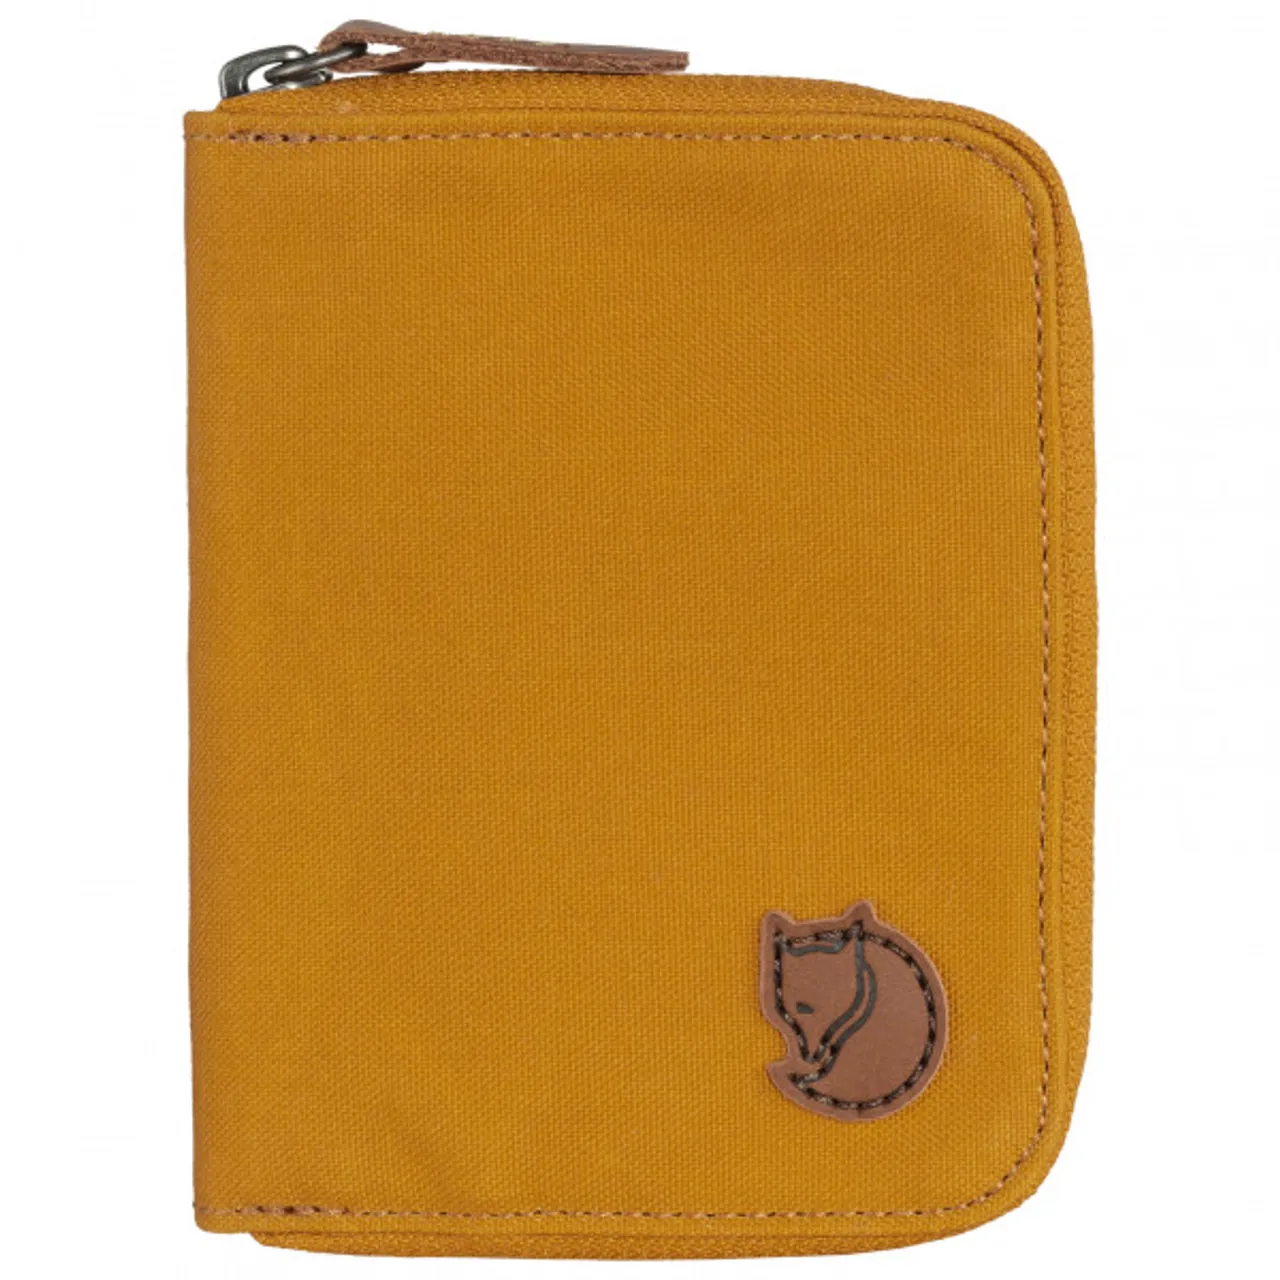 Fjällräven - Zip Wallet - Wallet size One Size, yellow